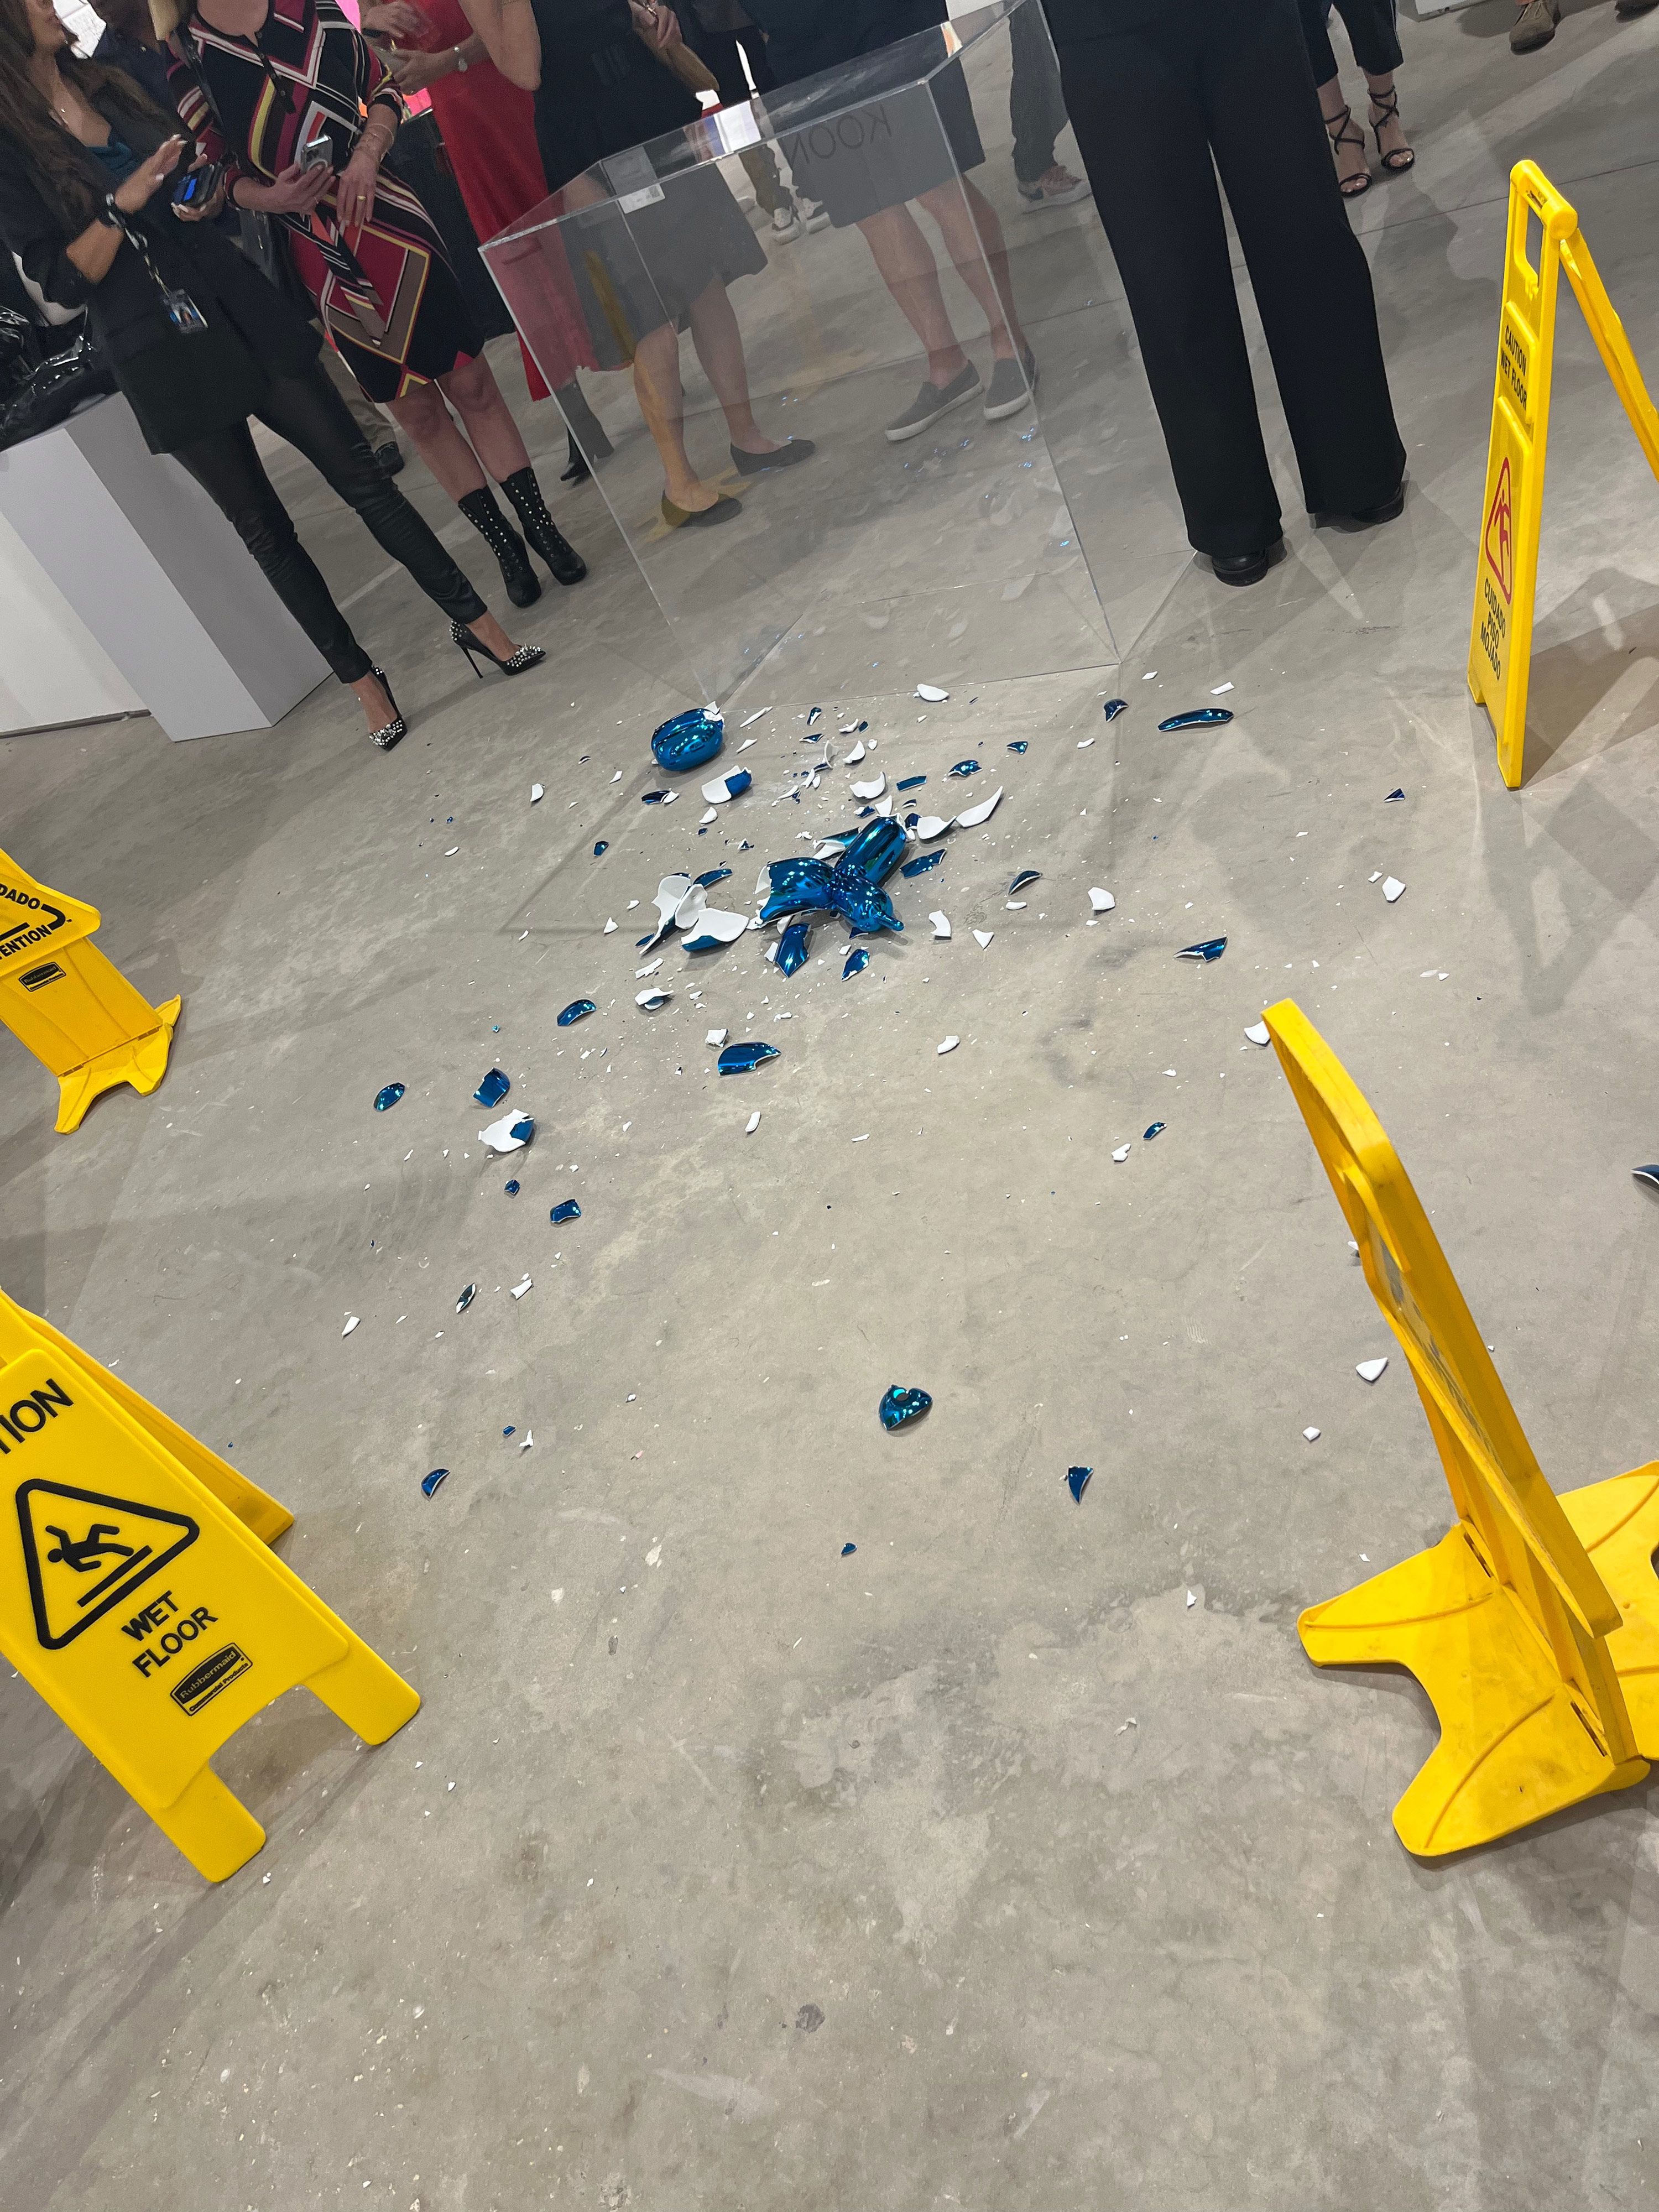 Collectors Offer to Buy Pieces of Broken Sculpture From Miami Art Fair